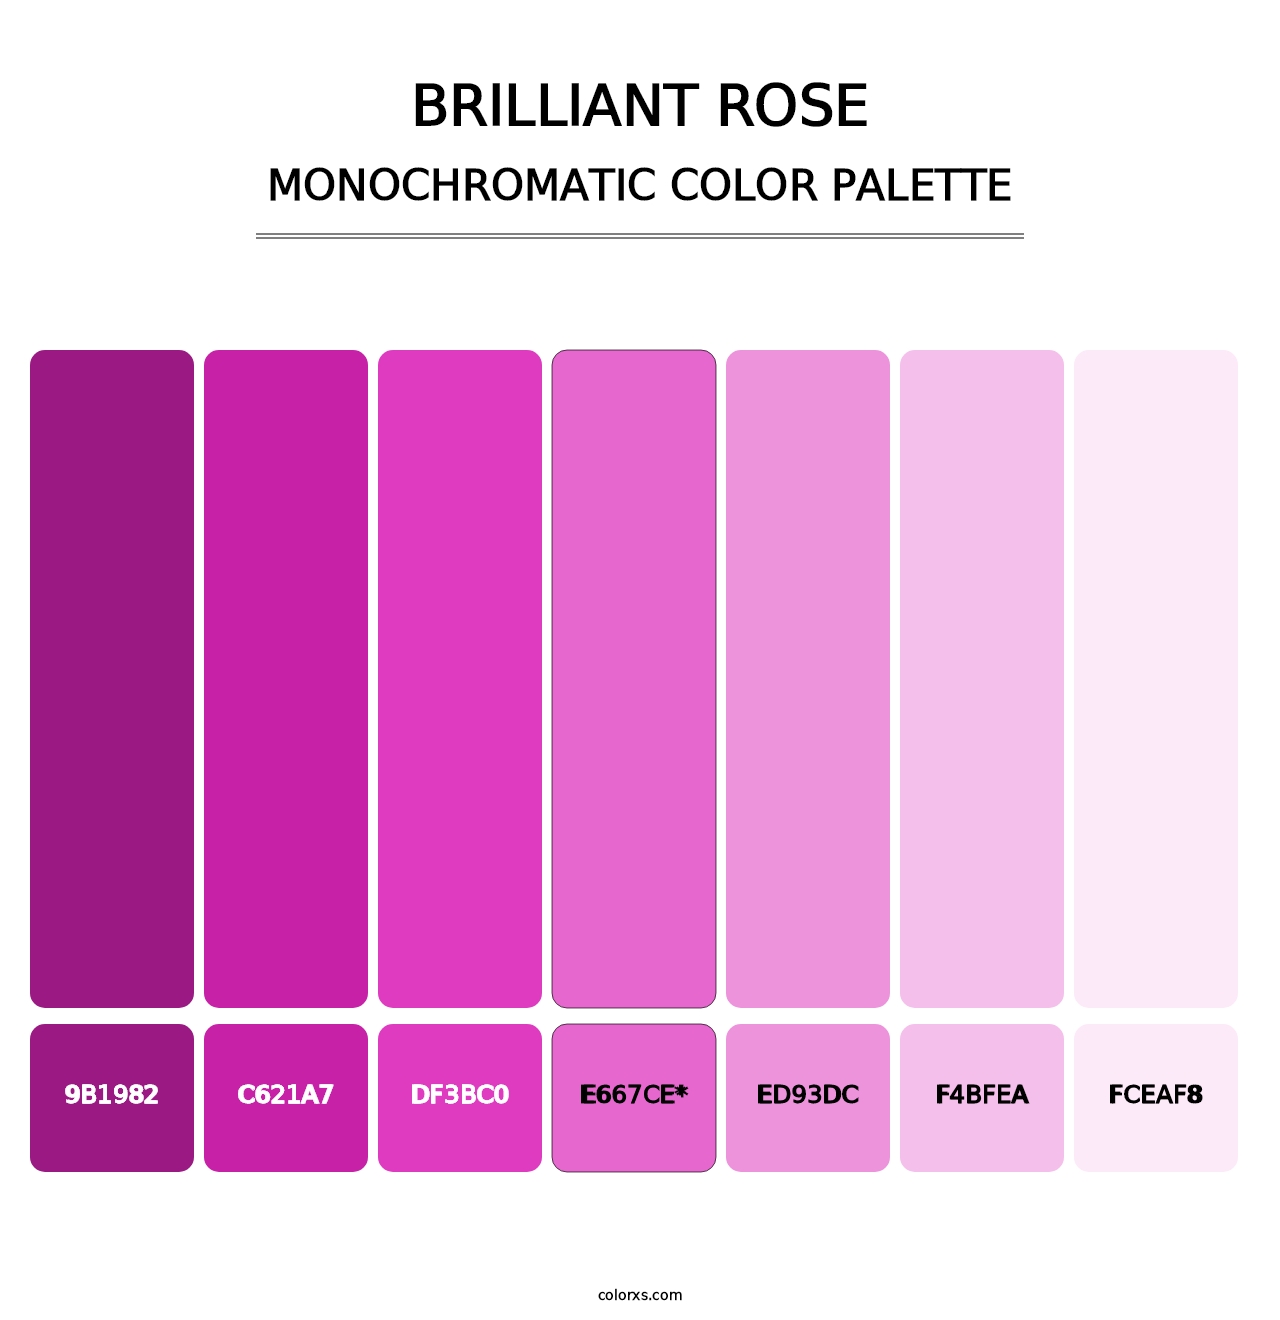 Brilliant Rose - Monochromatic Color Palette